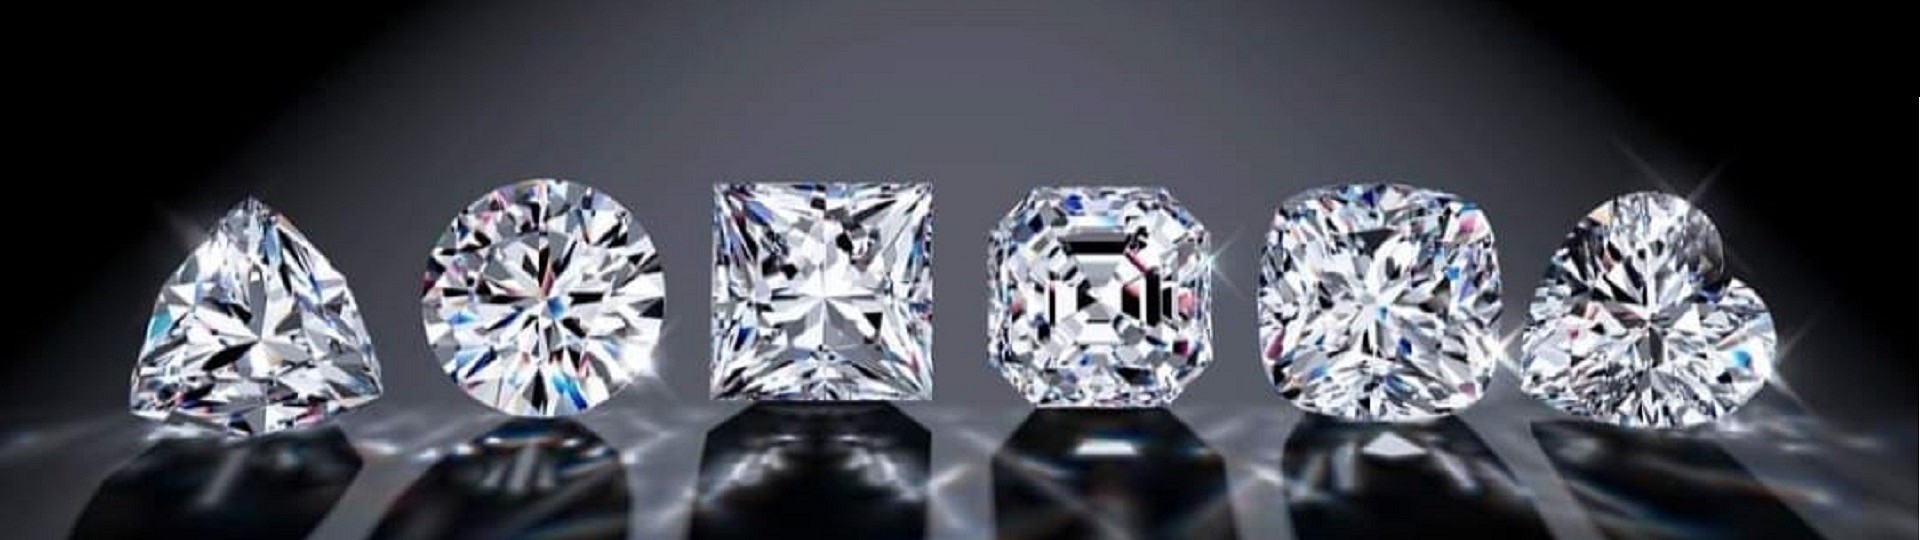 Be Natural, Buy Natural 100% GIA Diamonds by Bid Global International Auctioneers LLC